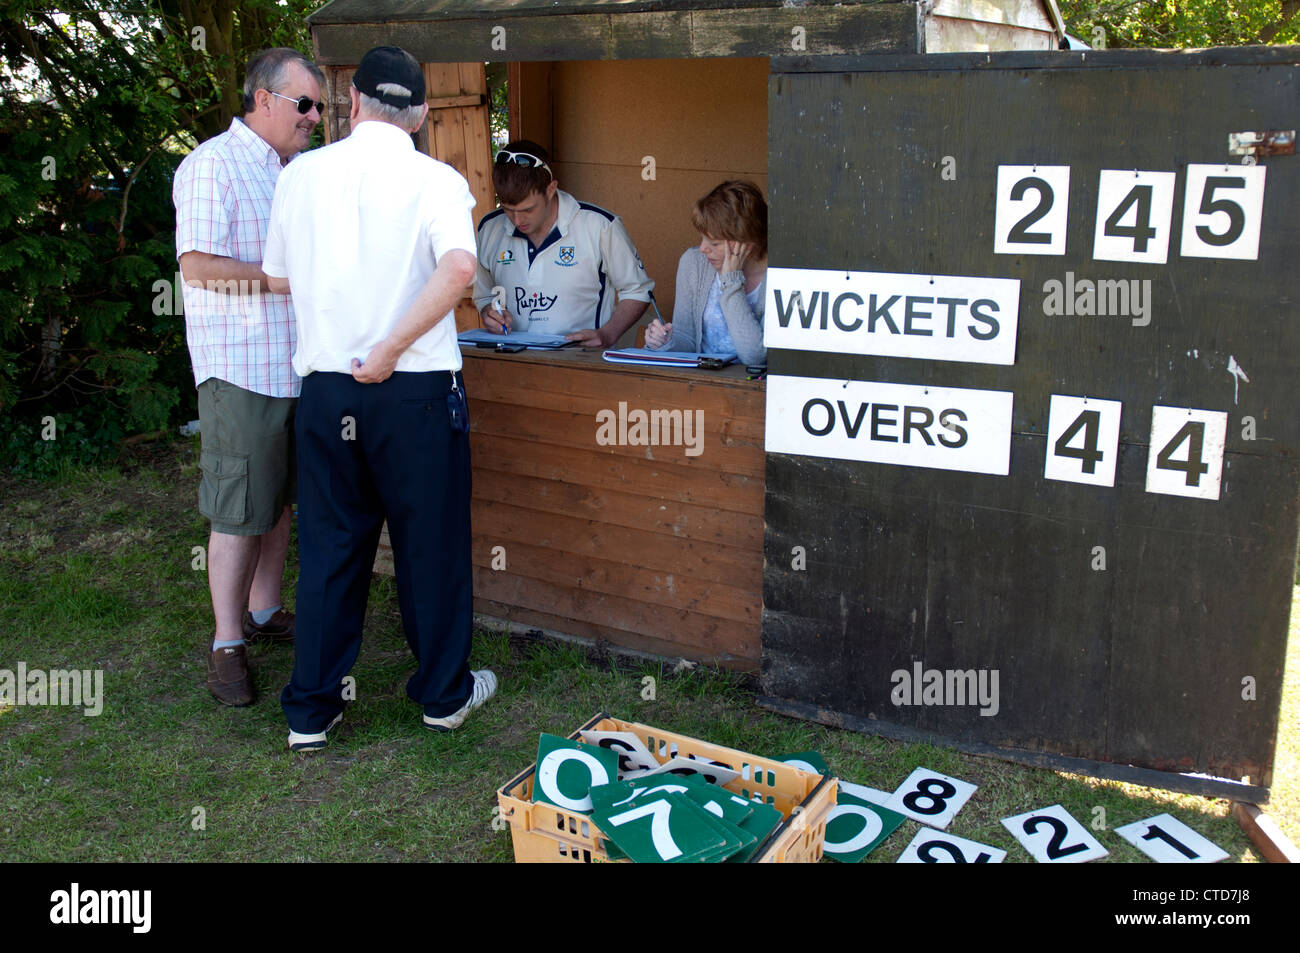 Village cricket scoreboard Stock Photo